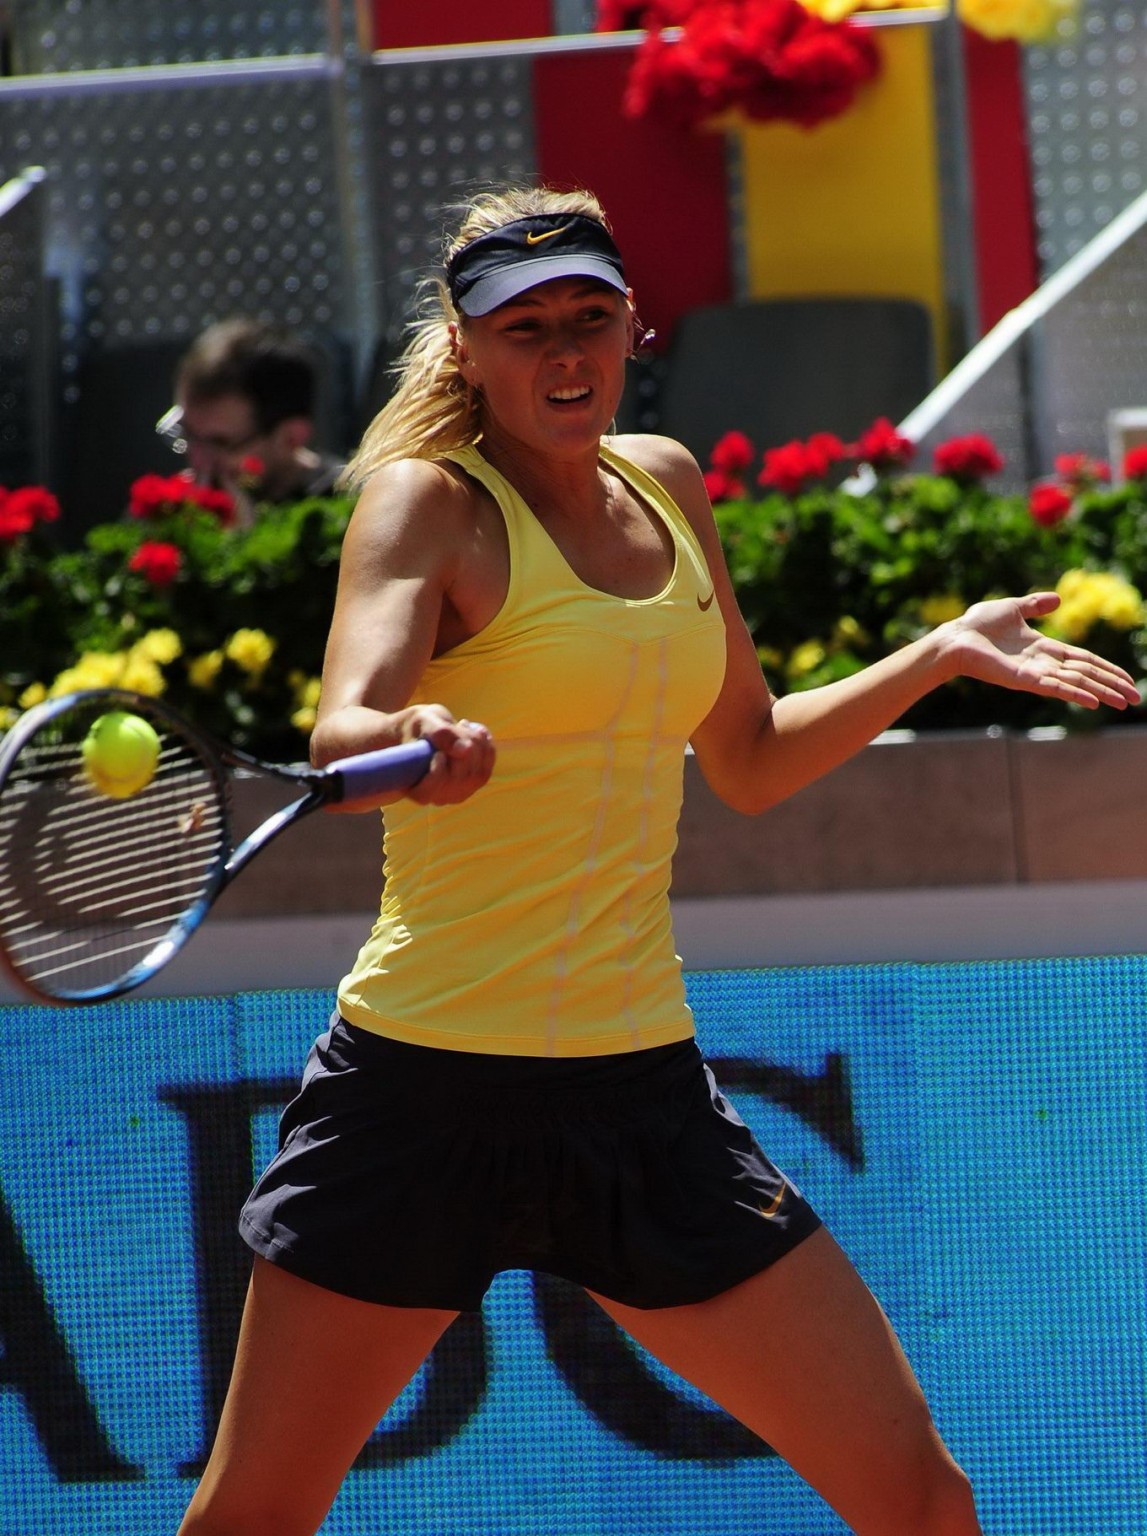 Maria Sharapova en jupe haute au tournoi des 'masters' de Madrid
 #75305209